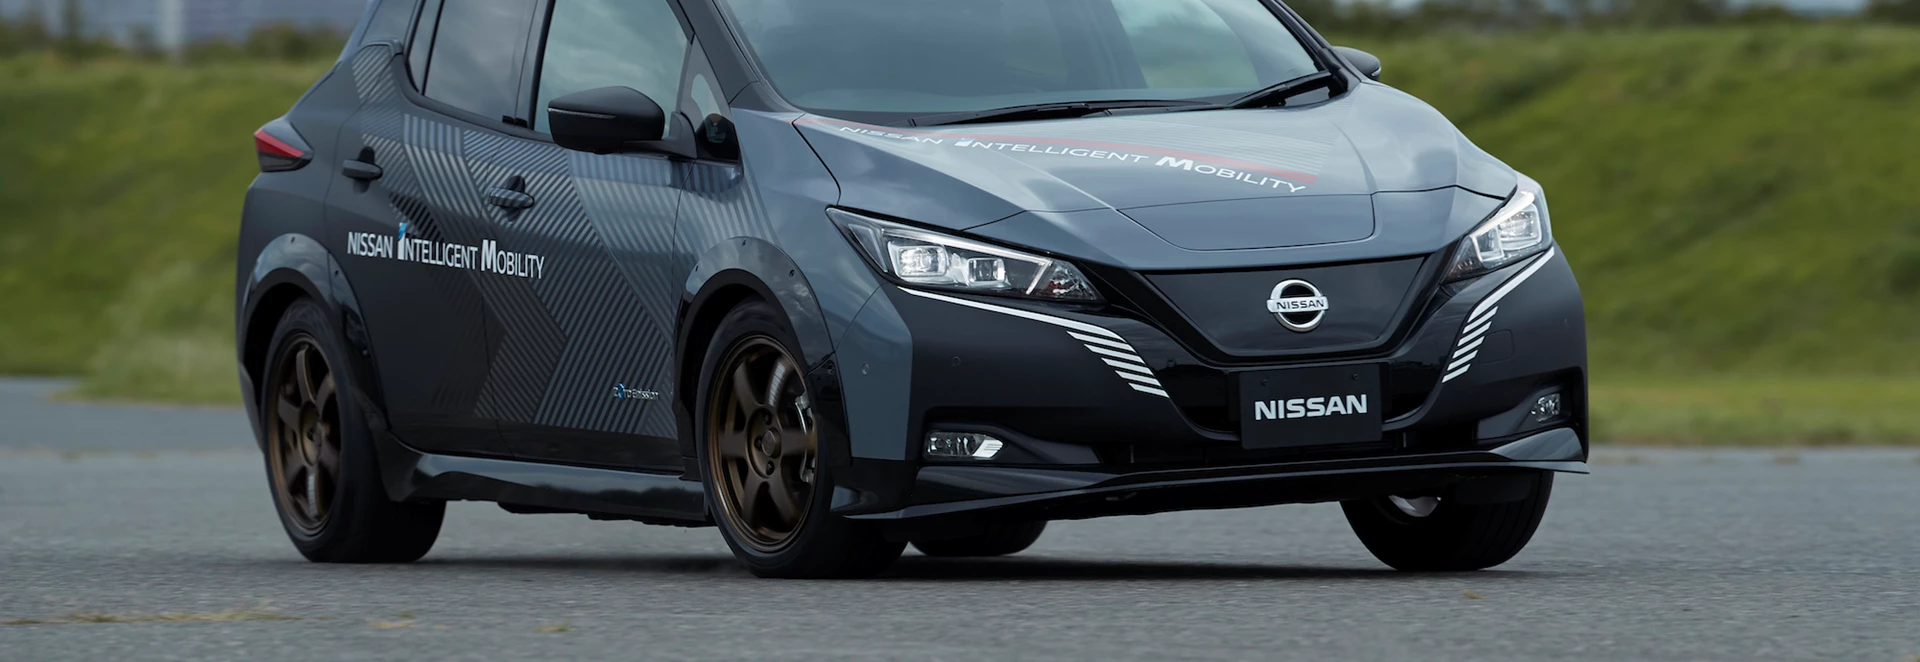 Nissan tests twin-motor electric powertrain technology